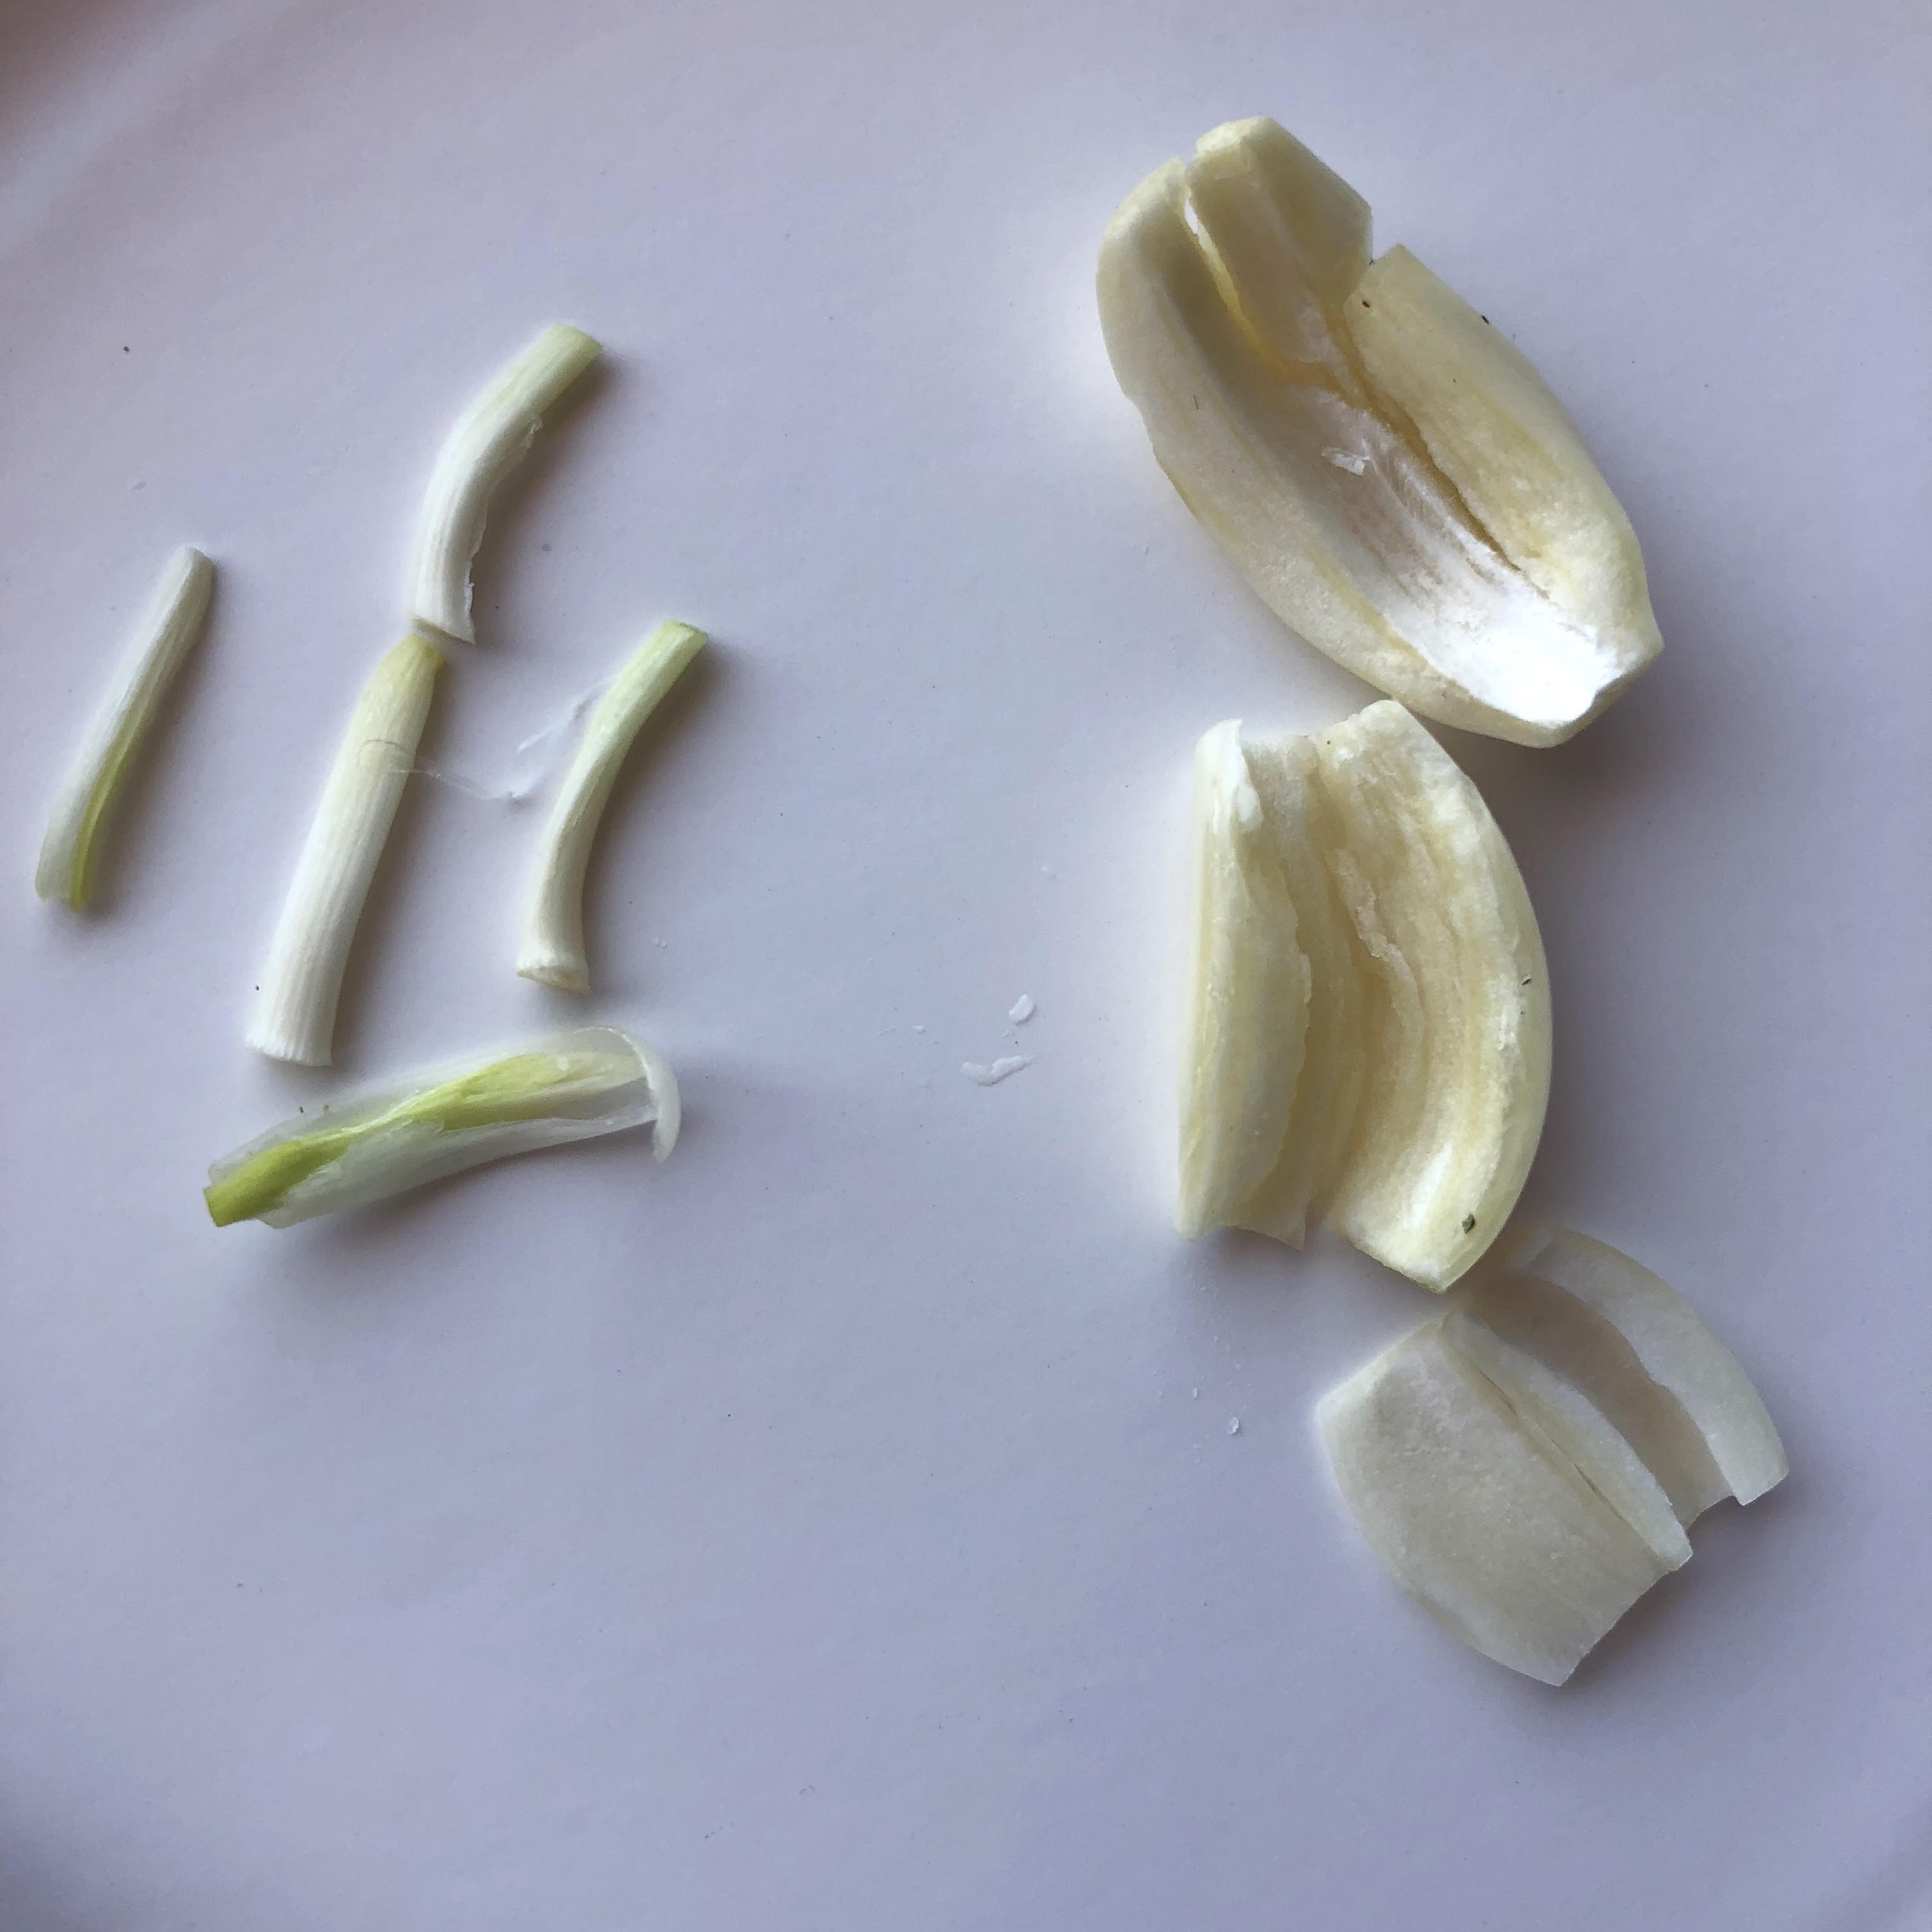 A Bit About Garlic